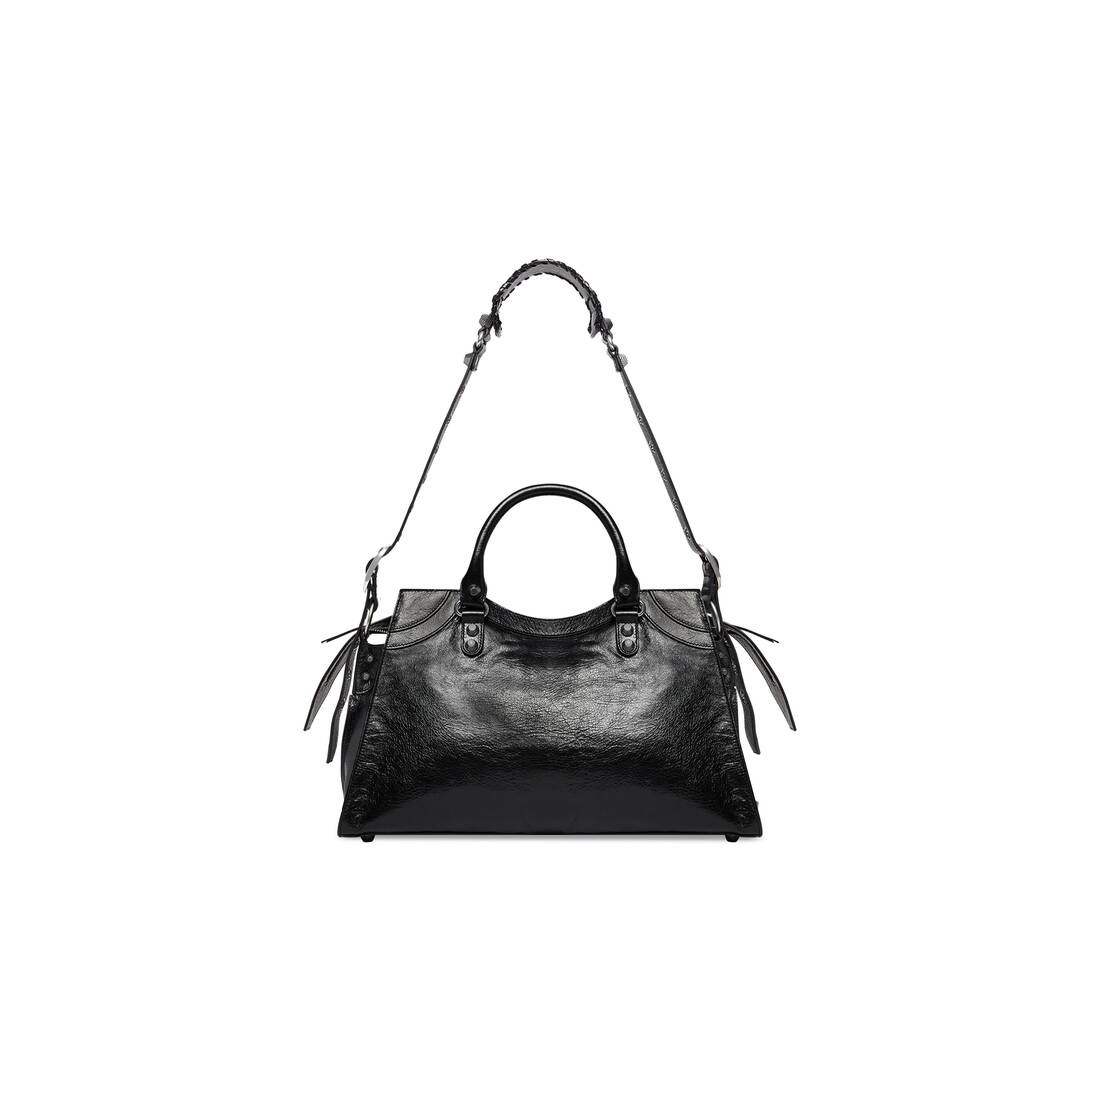 Women's Neo Cagole City Handbag With Rhinestones in Black - 3